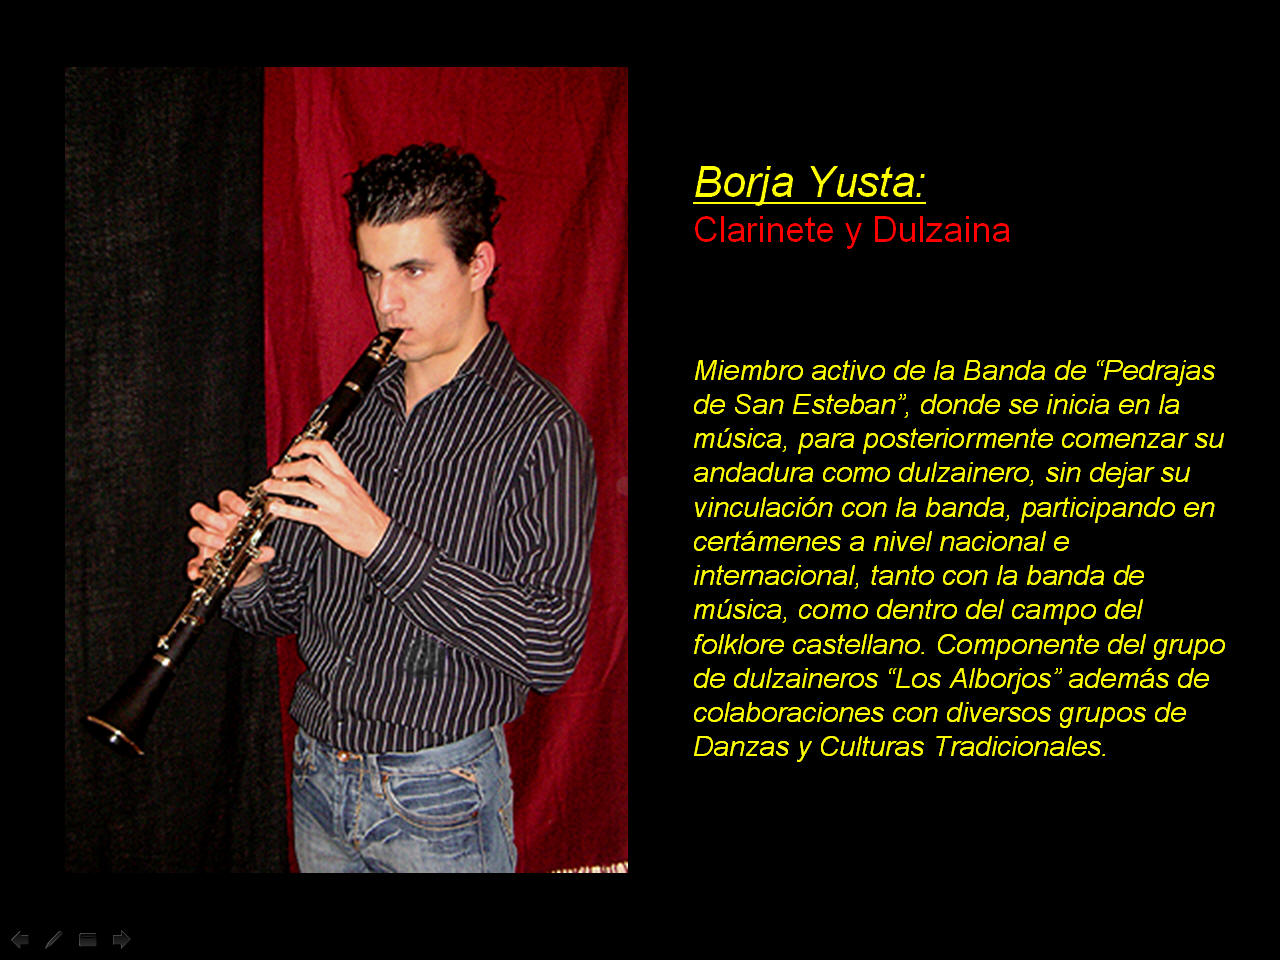 Borja Yuste, Clarinete y dulzaina